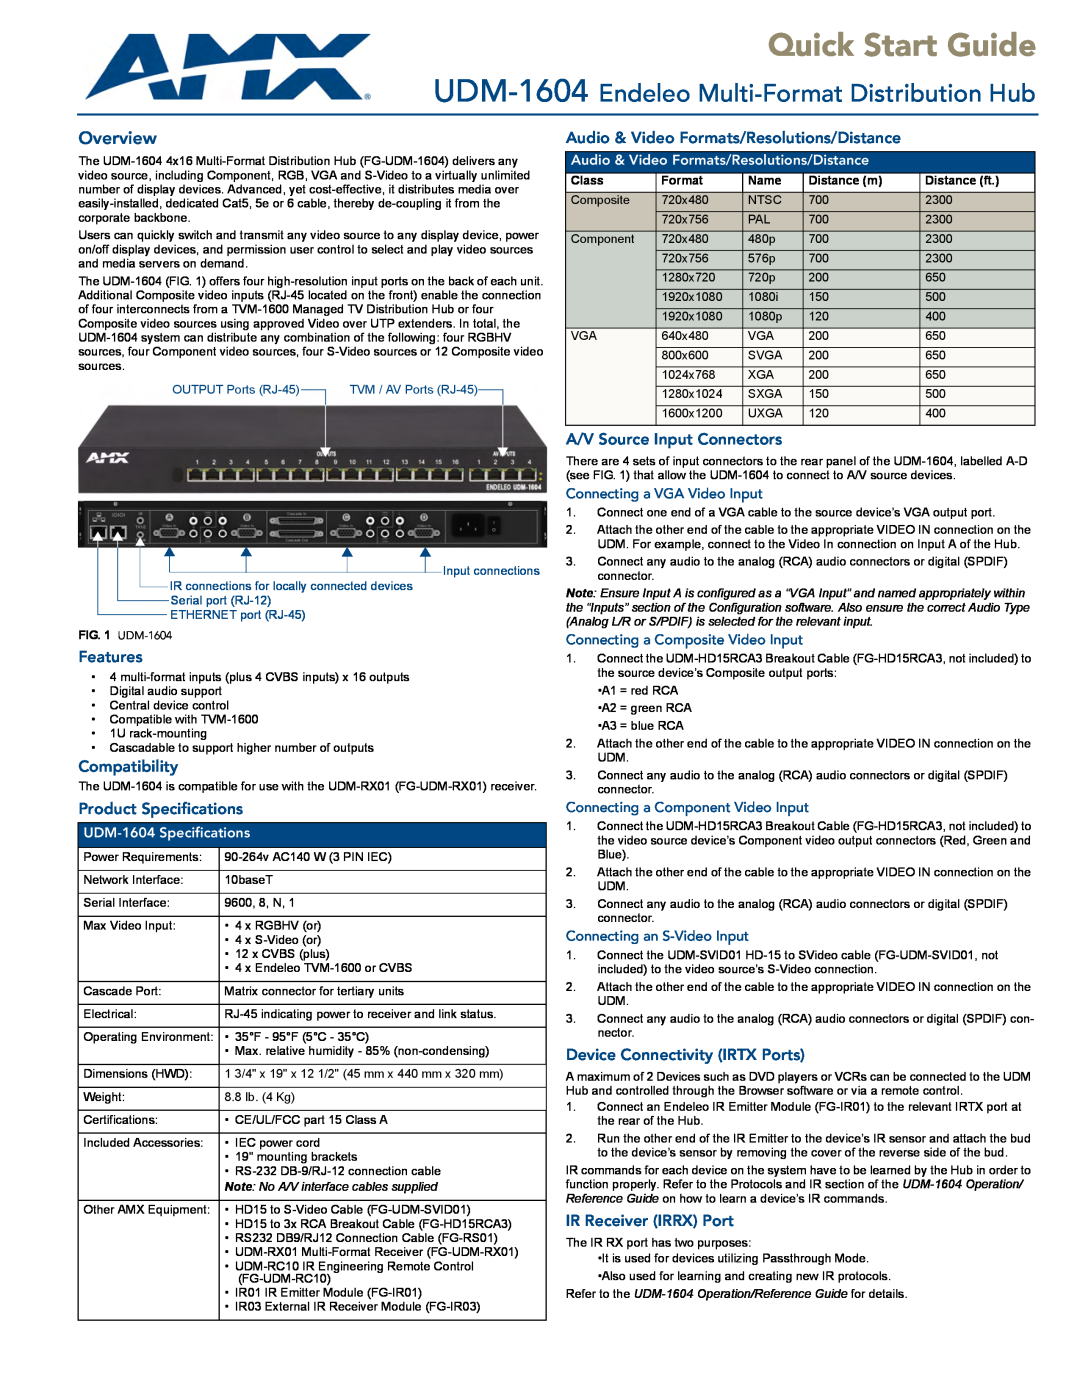 AMX UDM-1604 quick start Features, Compatibility, Audio & Video Formats/Resolutions/Distance, A/V Source Input Connectors 